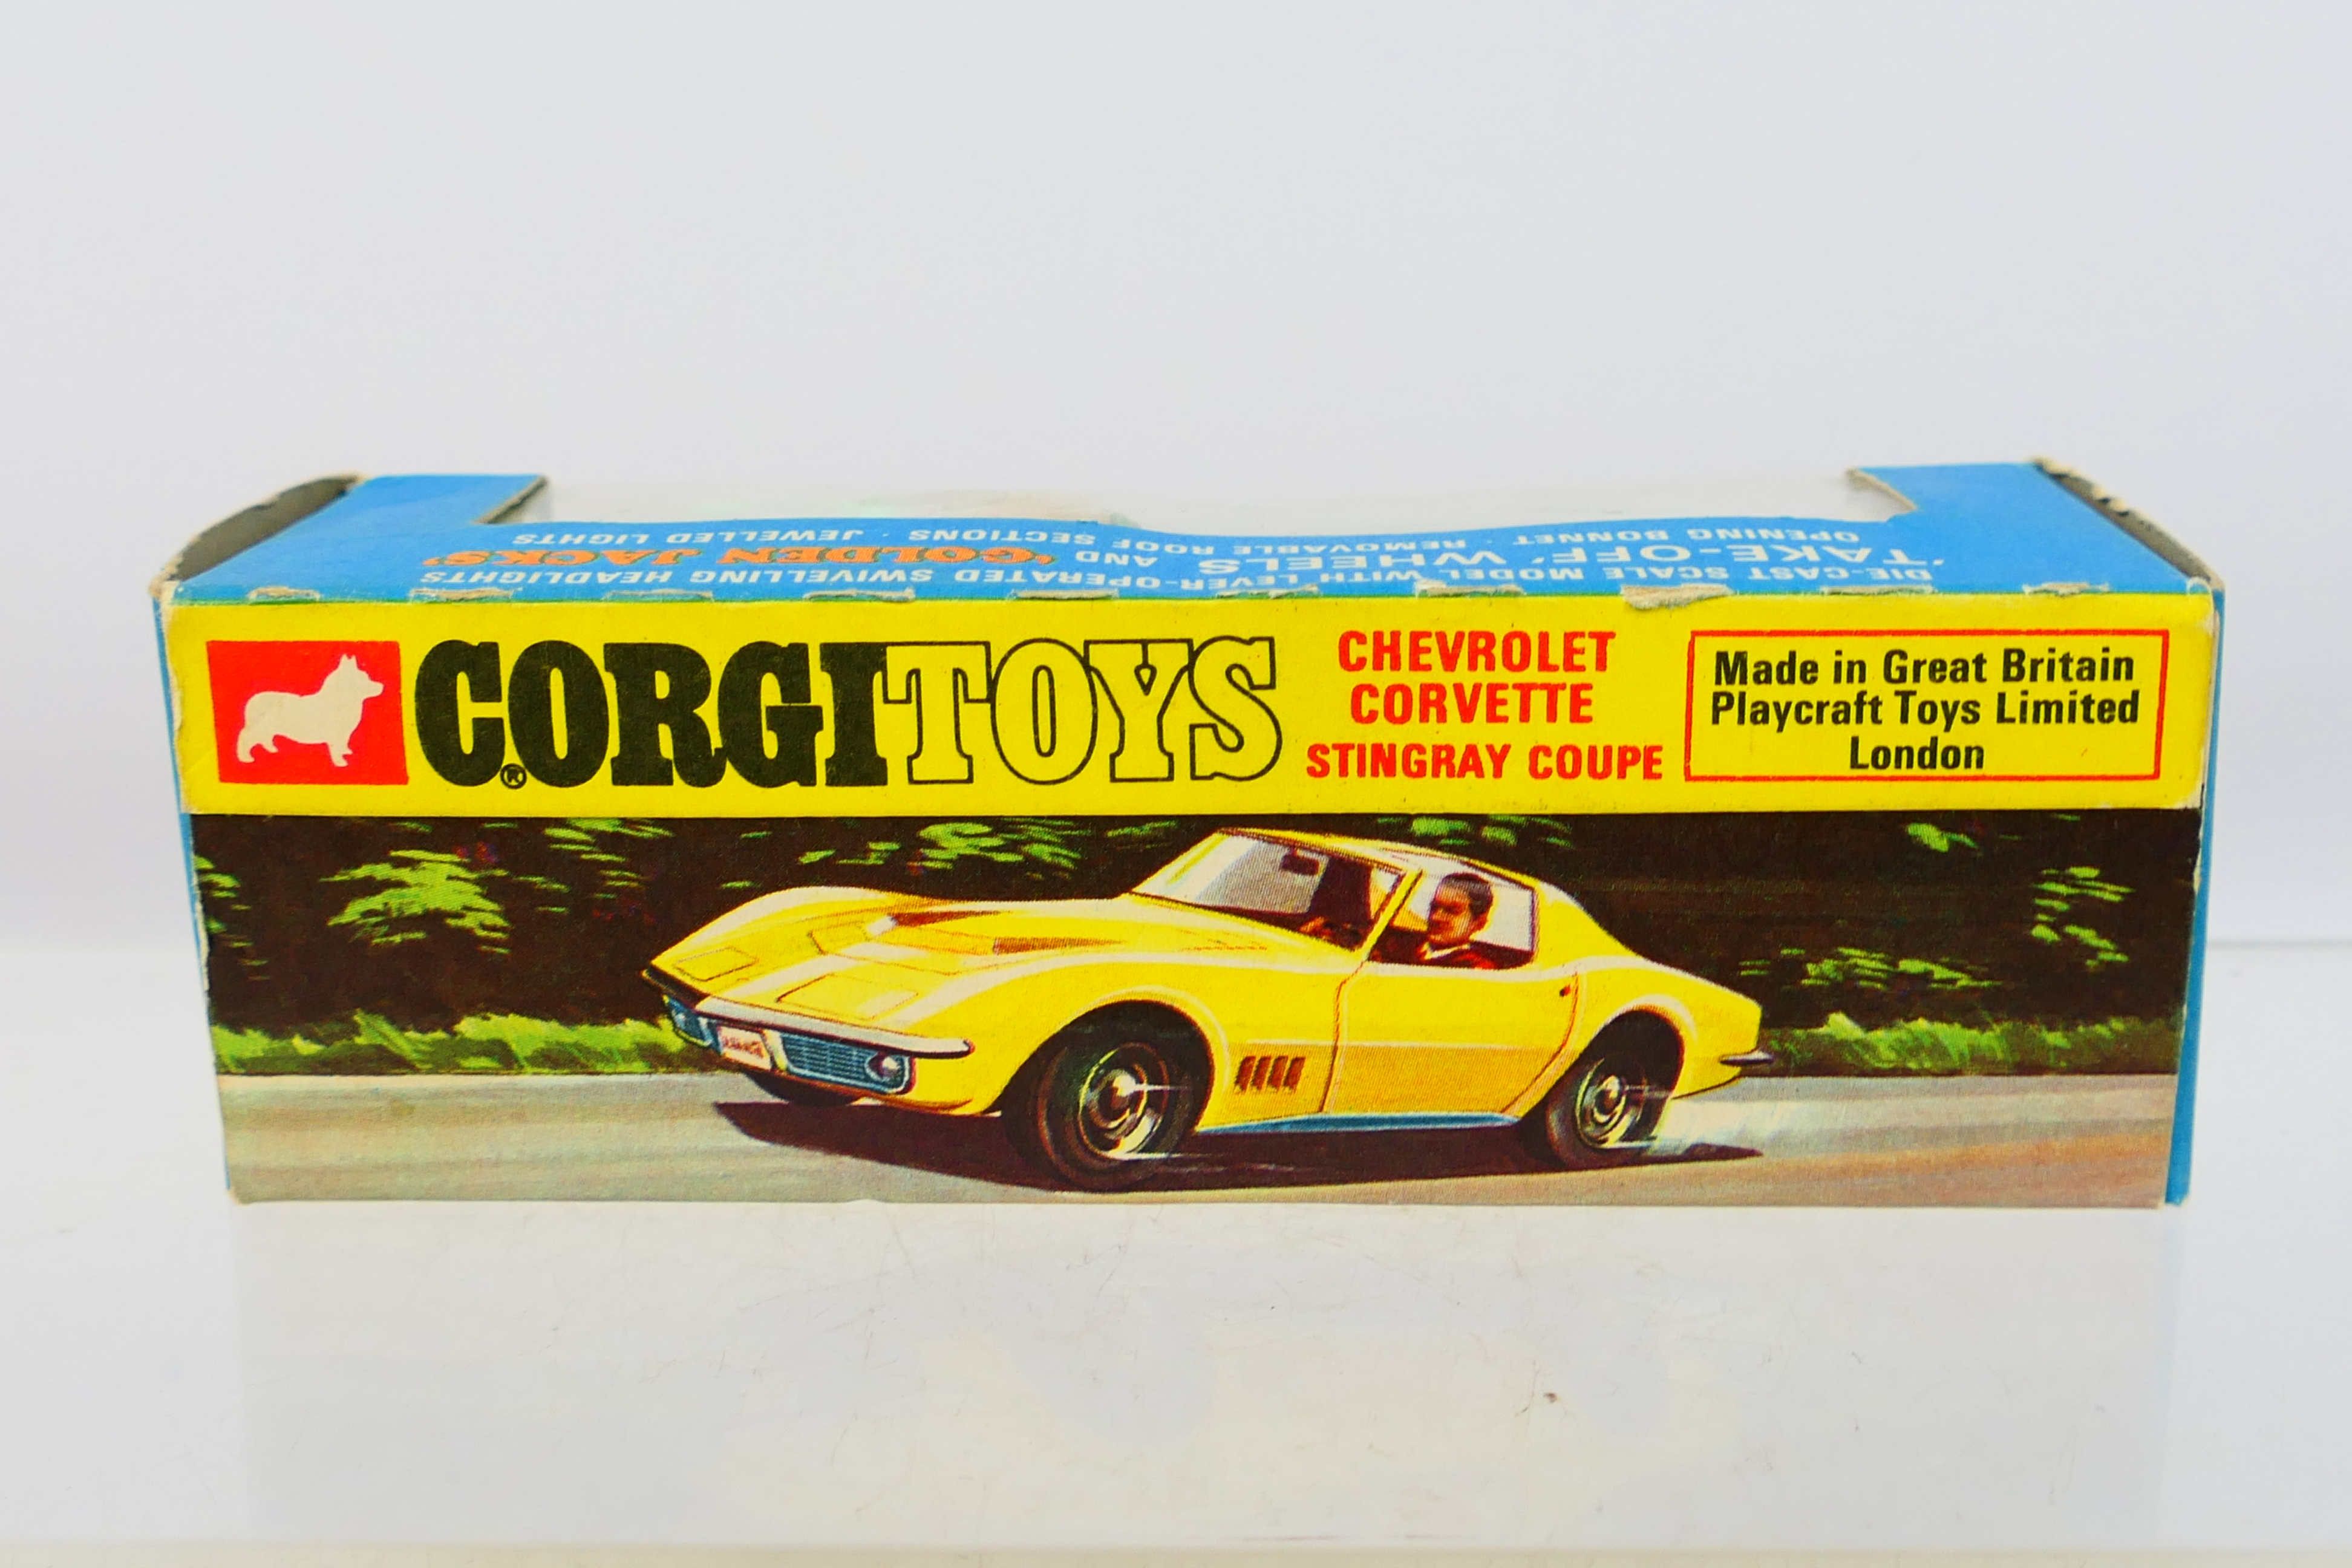 Corgi - Golden Jacks - A boxed Chevrolet Corvette Stingray Coupe # 300. - Image 3 of 7